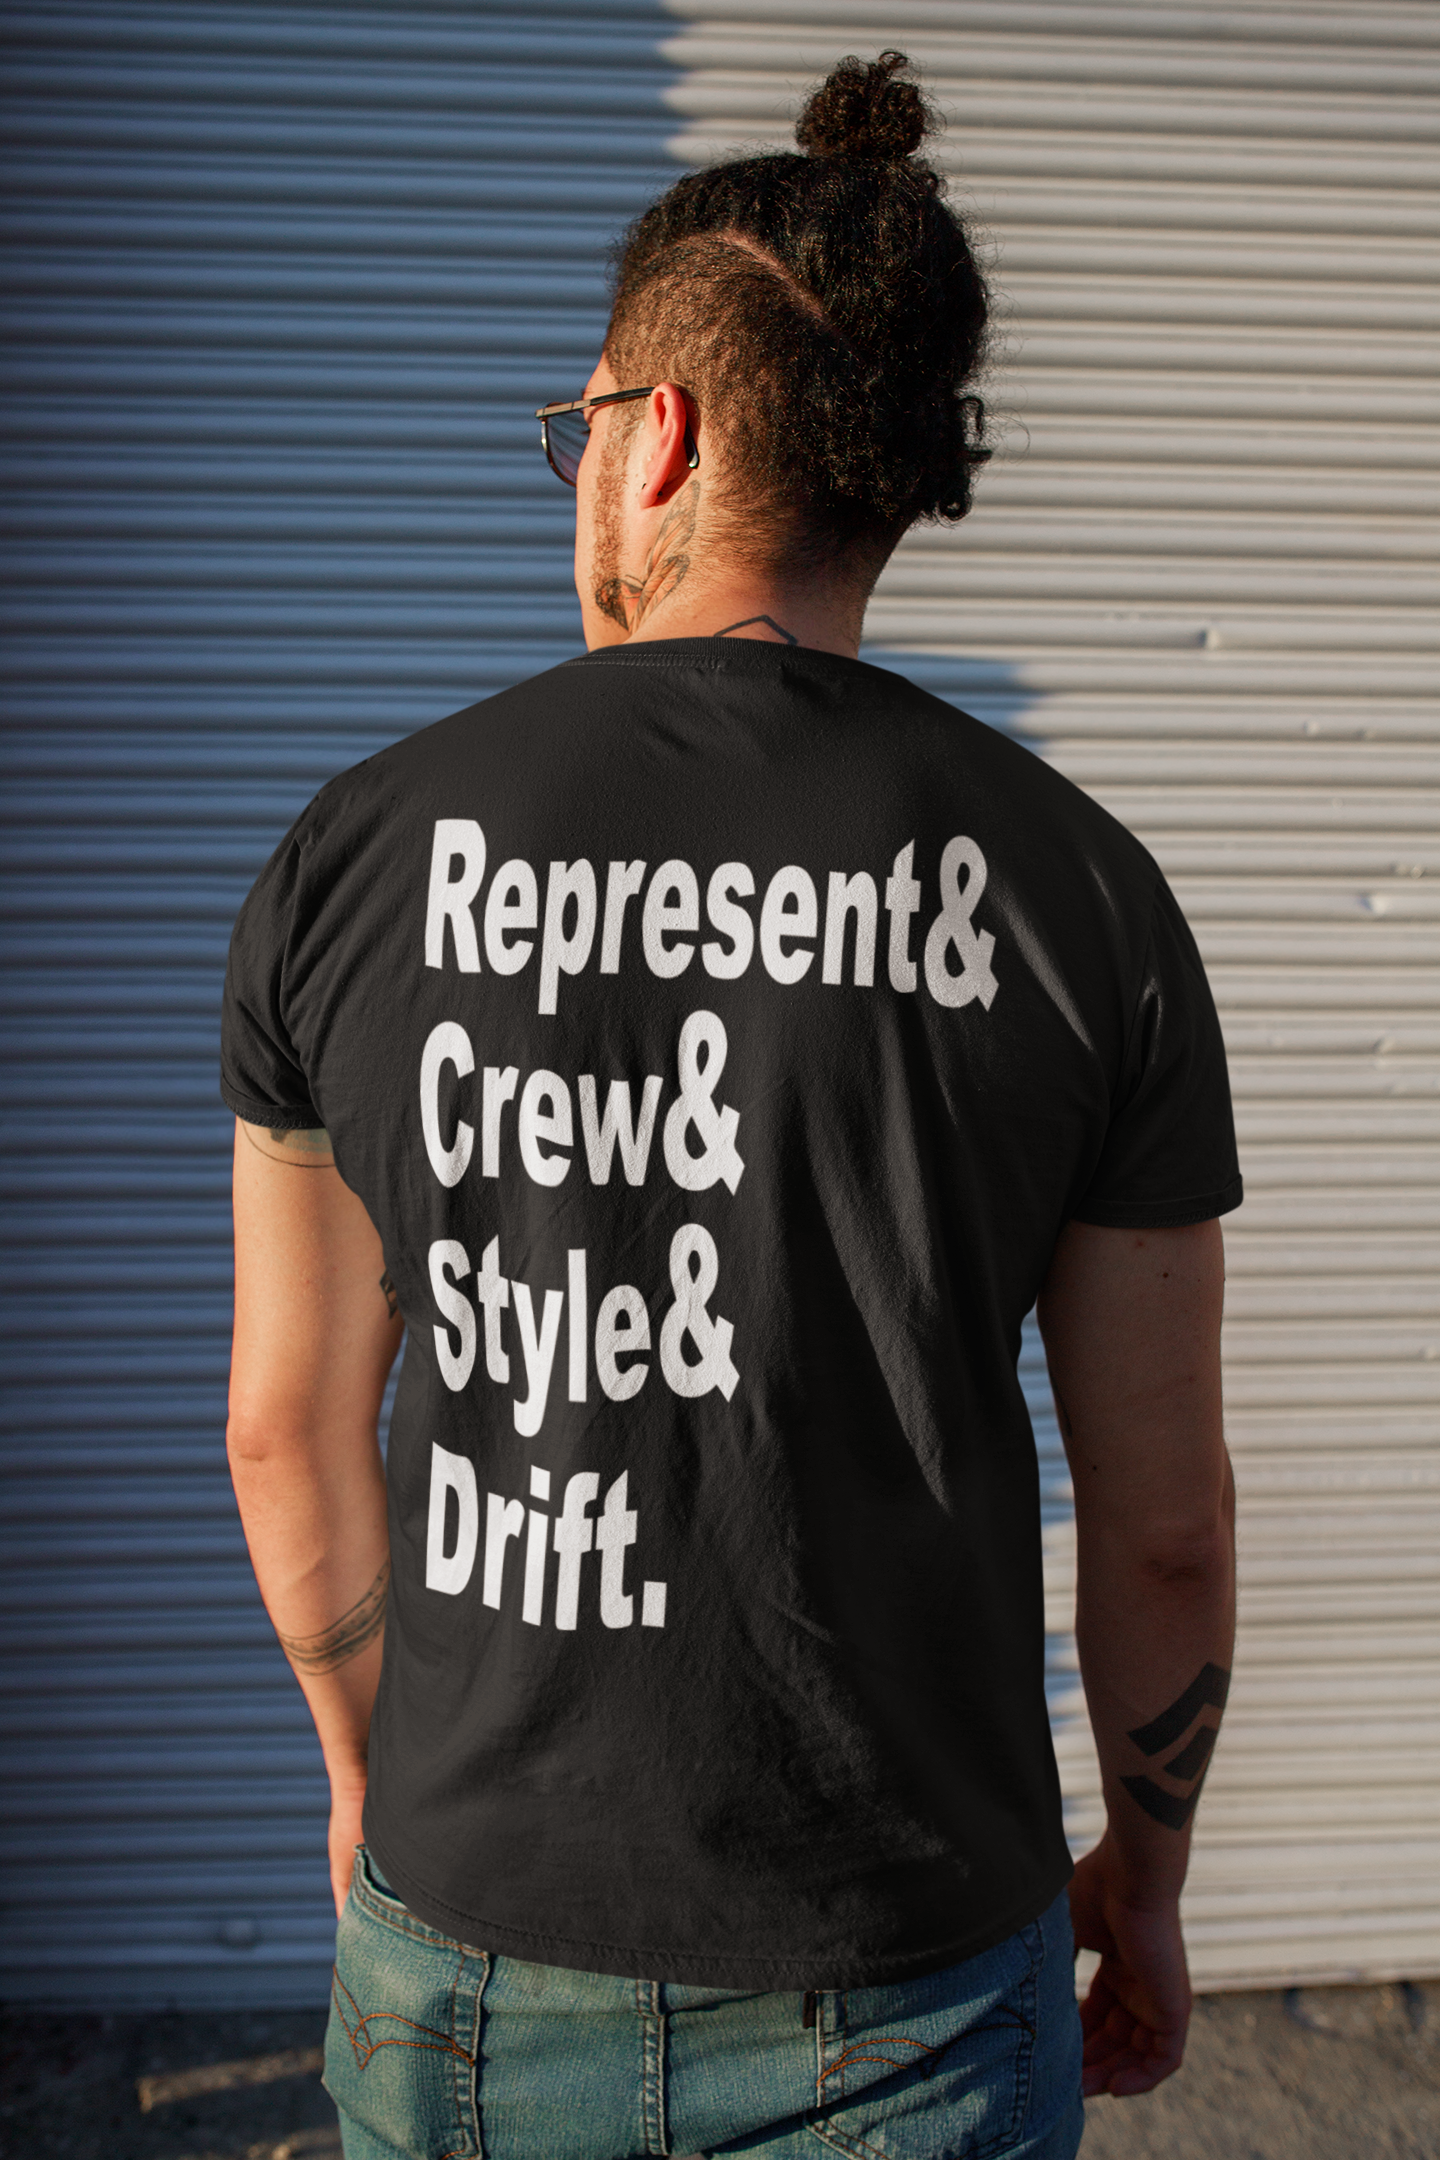 Rep Crew Style & Drift Shirt